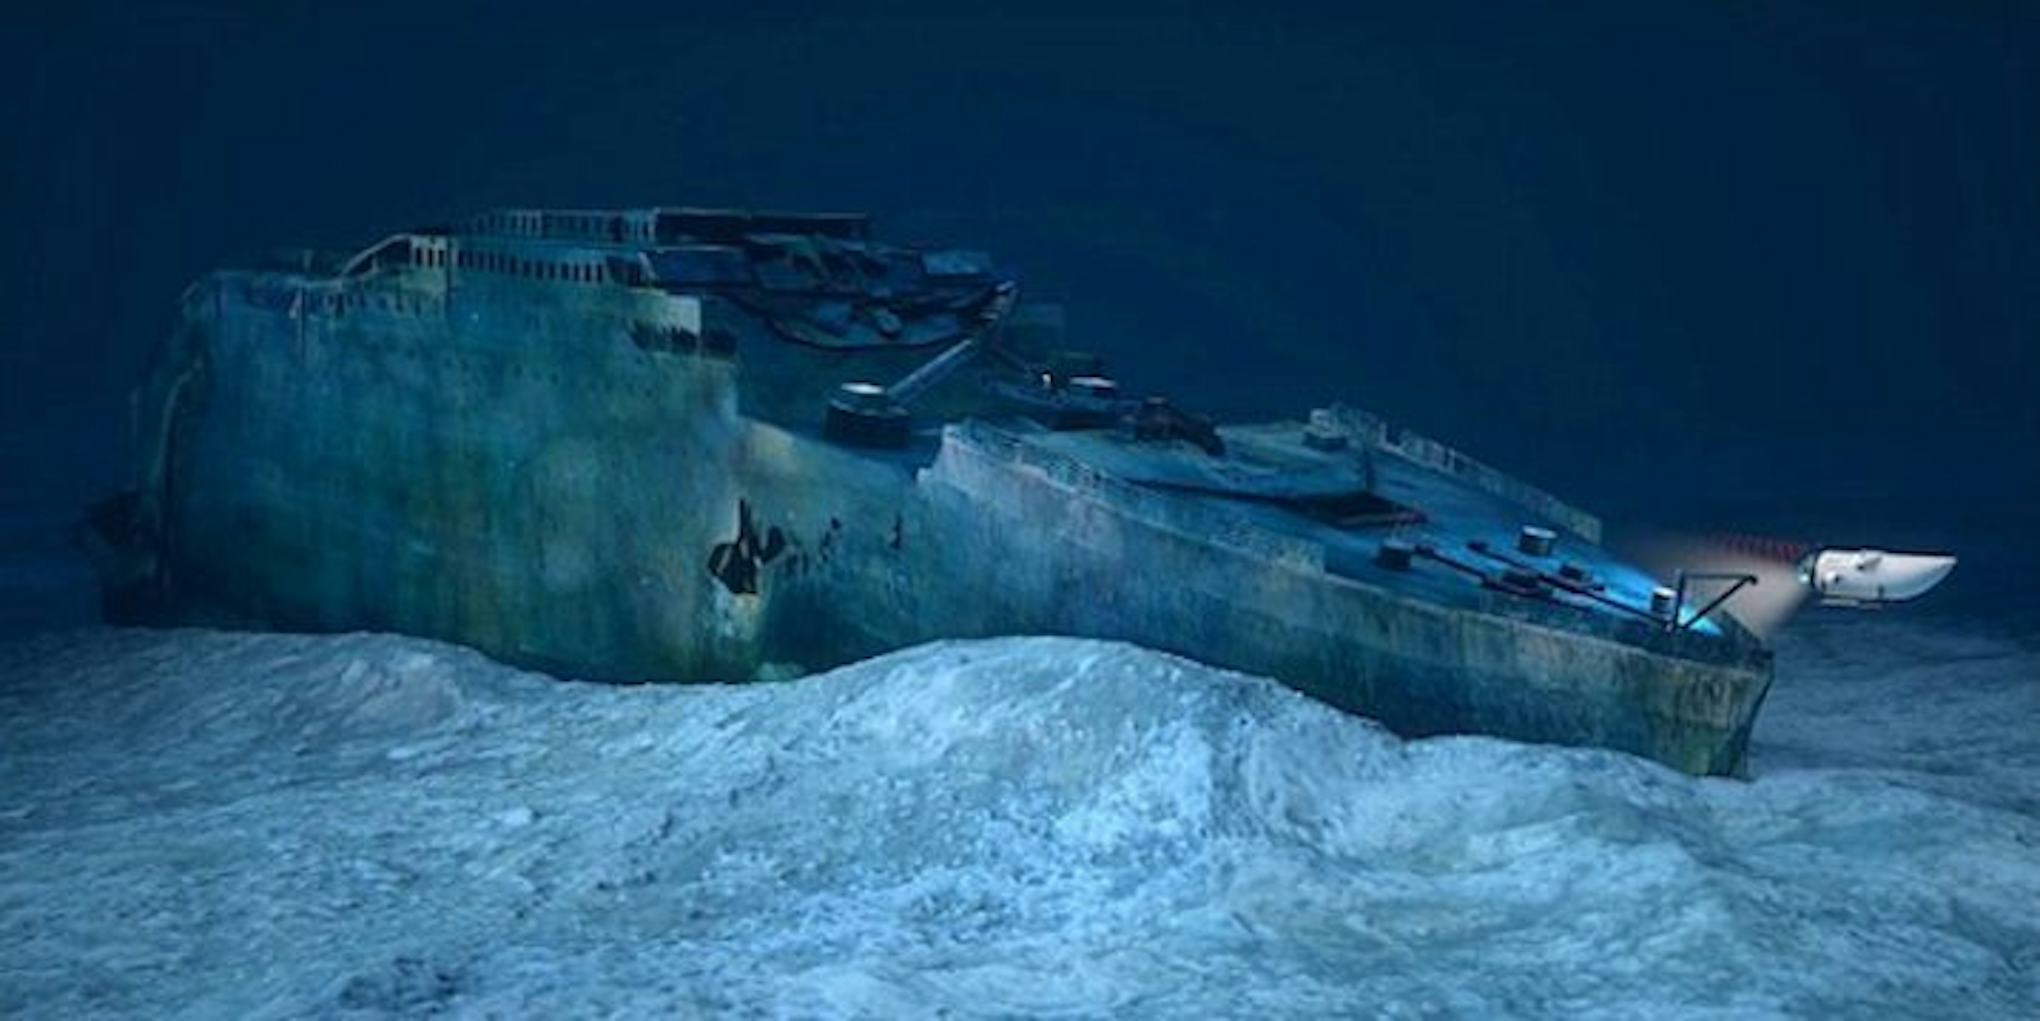 titanic wreck tour cost